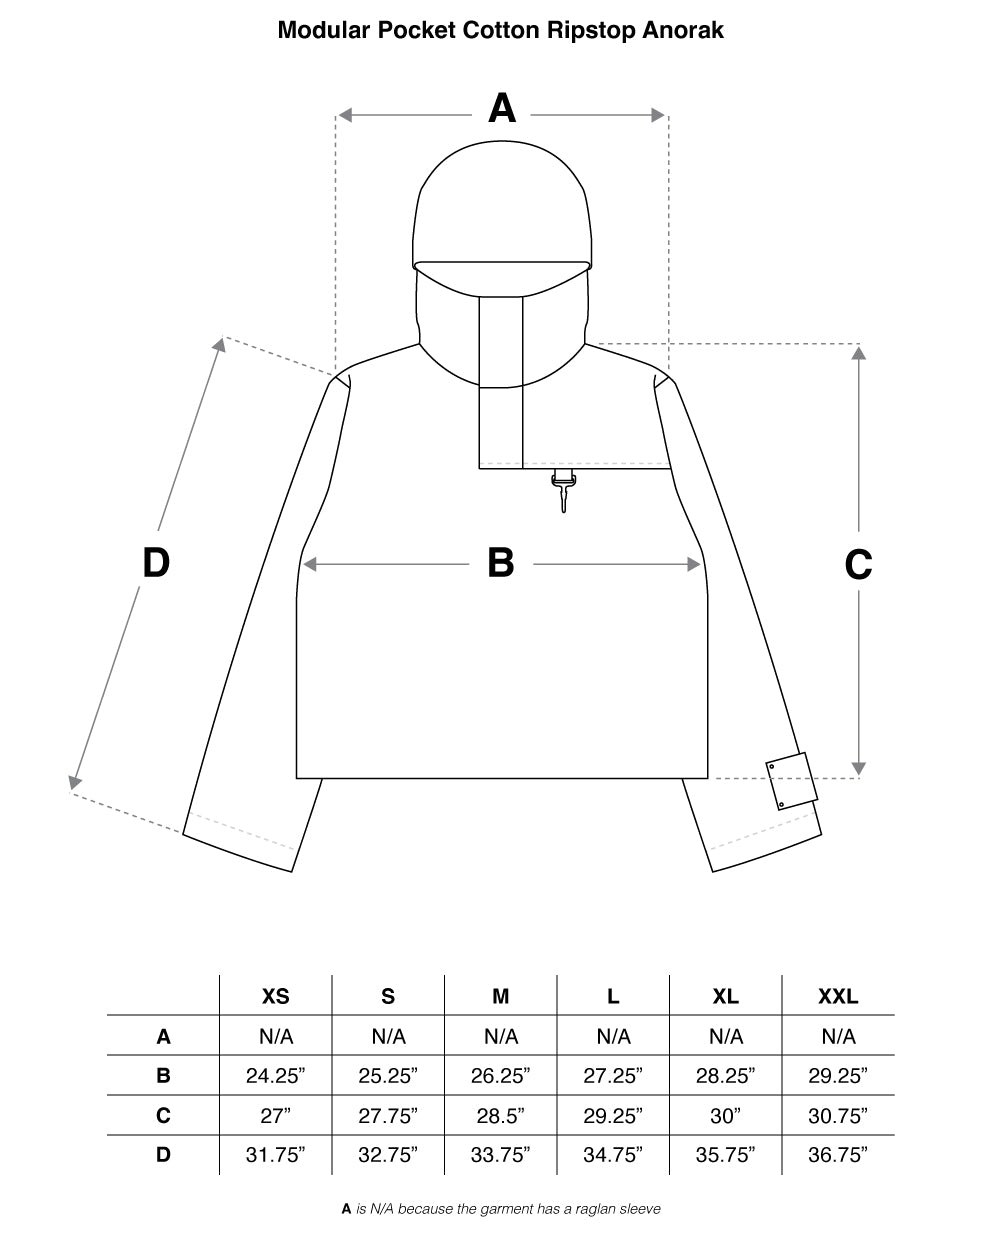 Modular Pocket Cotton Ripstop Anorak in Sage Size Guide